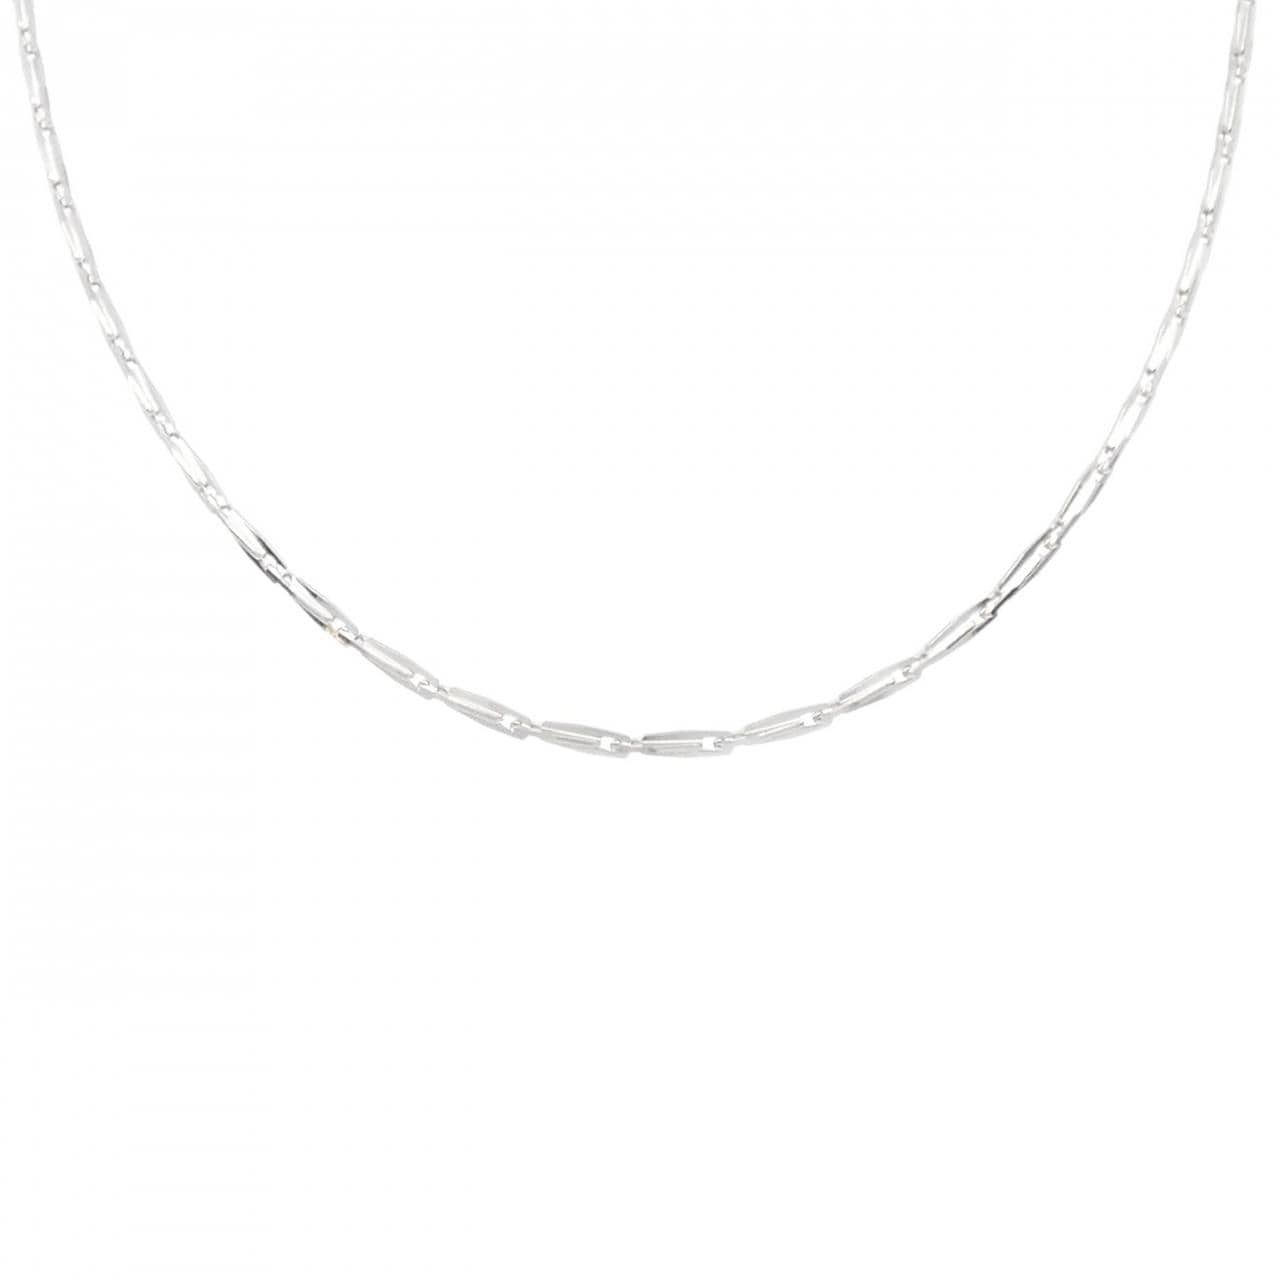 K18WG necklace